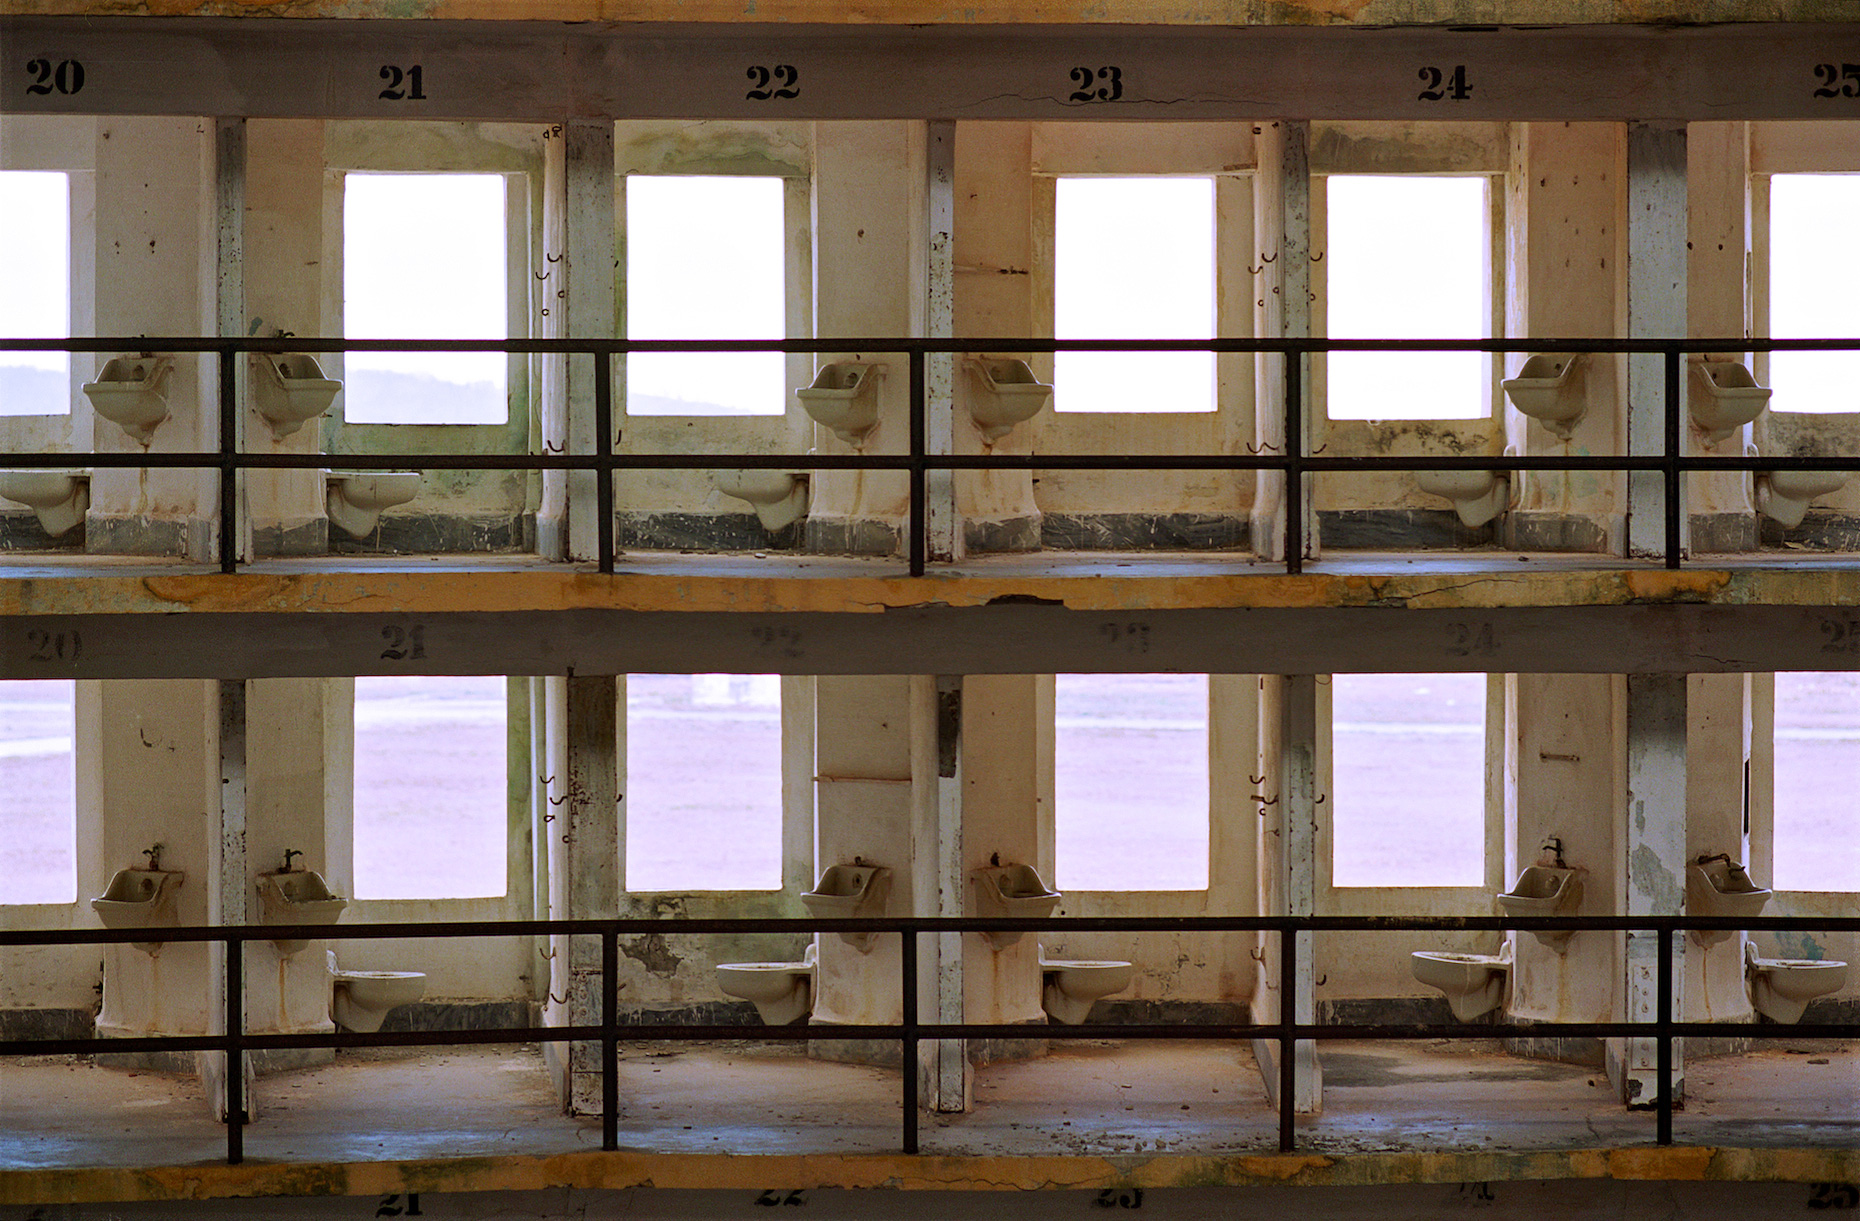 012-prison-cells-close.jpg